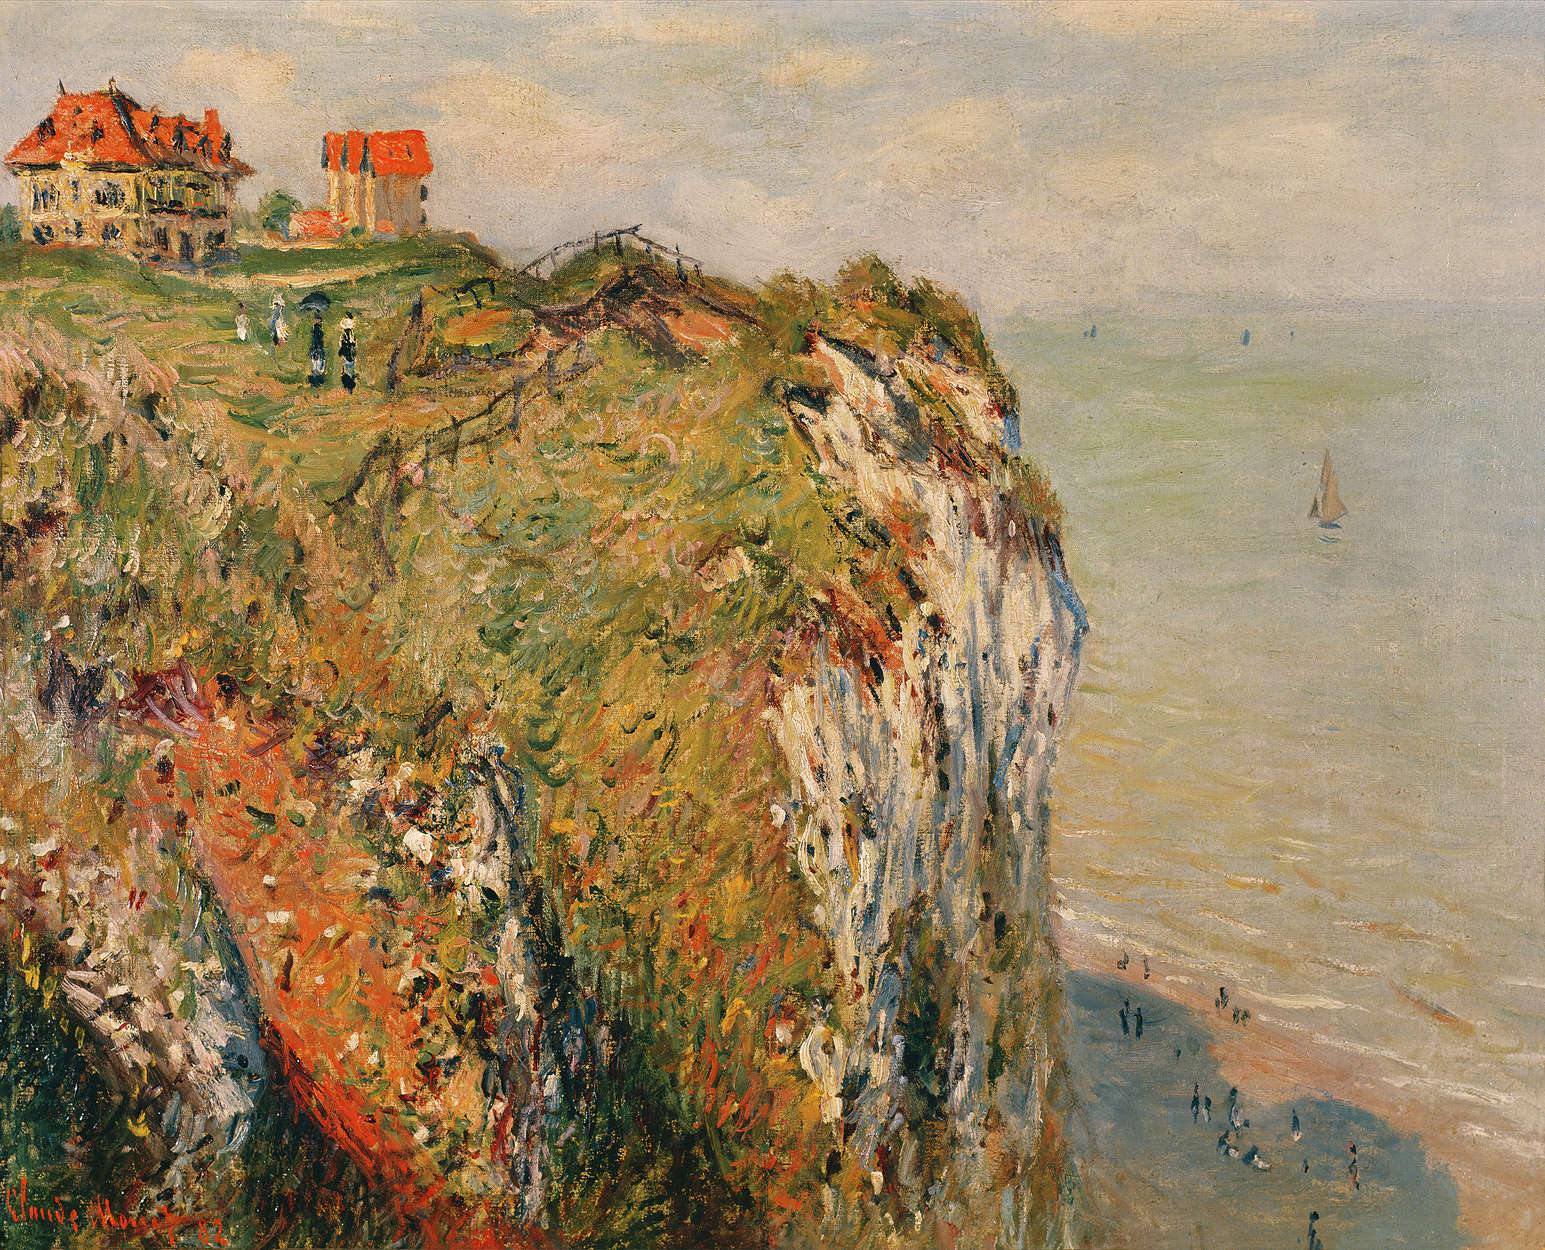             Fotomurali "Scogliera vicino a Dieppe" di Claude Monet
        